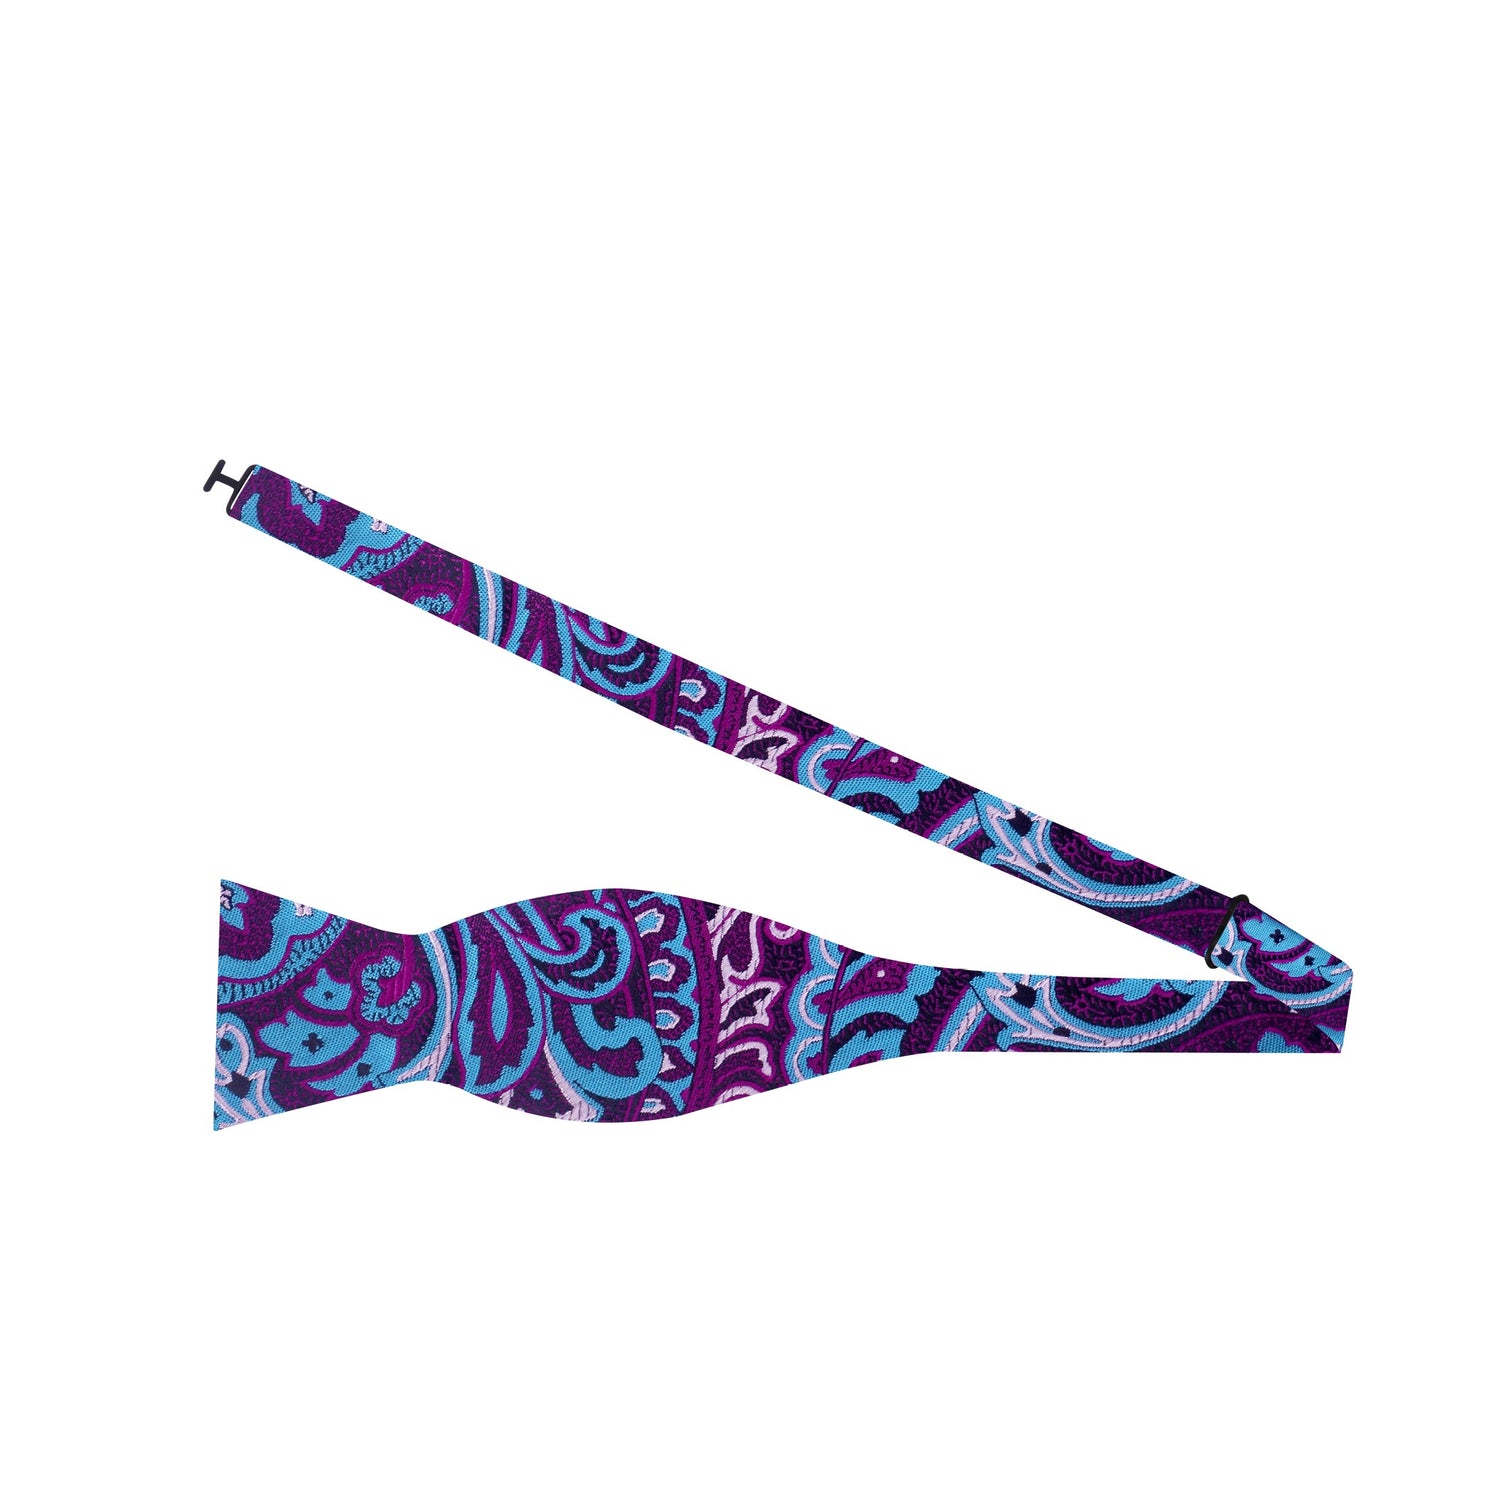 Self Tie Bow Tie: A Blue, Purple Ornate Paisley Pattern Silk Self Tie Bow Tie